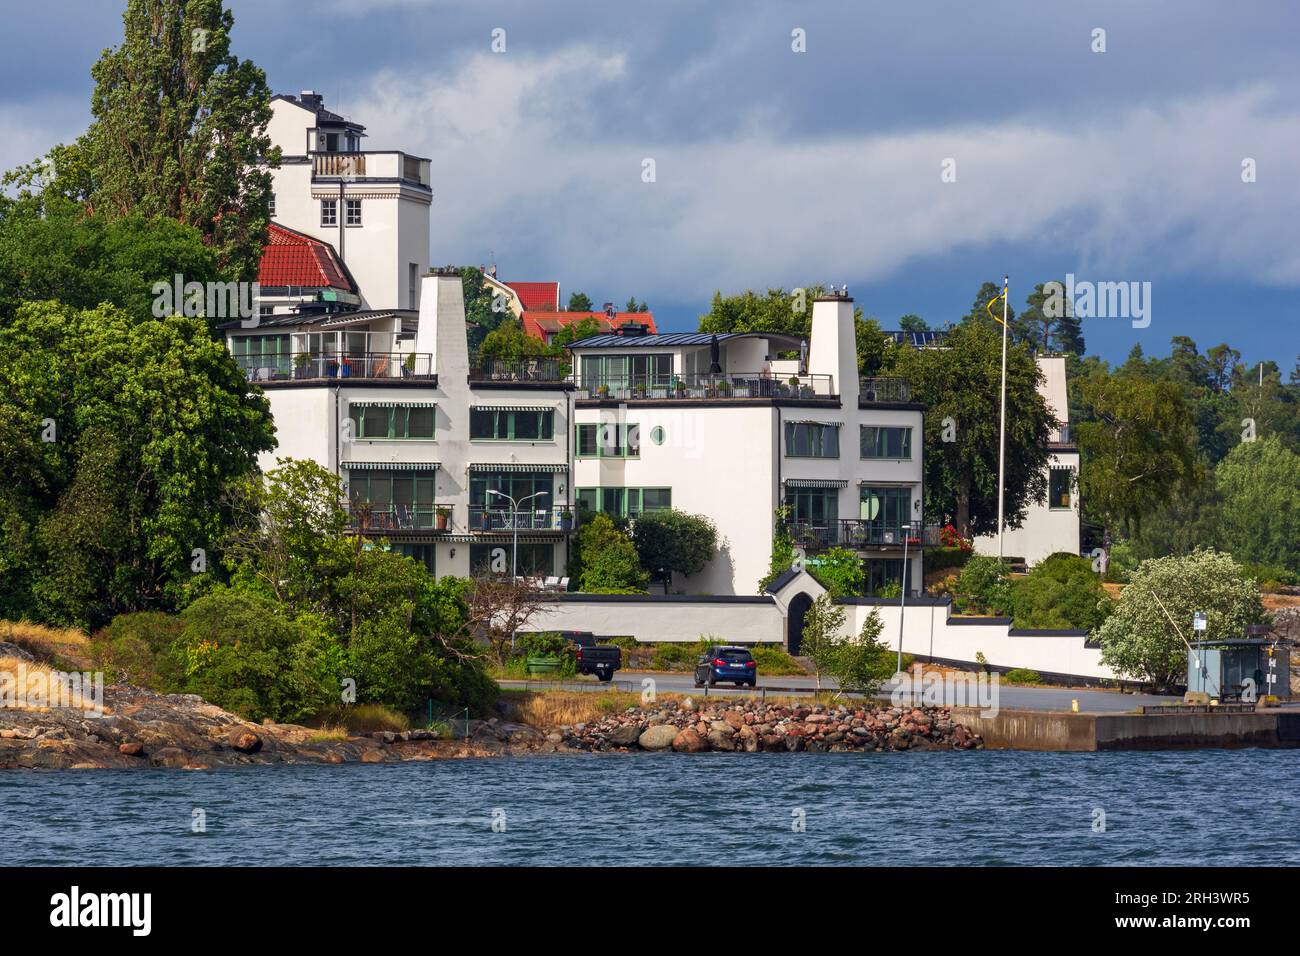 Gashaga District, Lidingo Island, Stockholm Archipelago, Sweden, Scandinavia Stock Photo